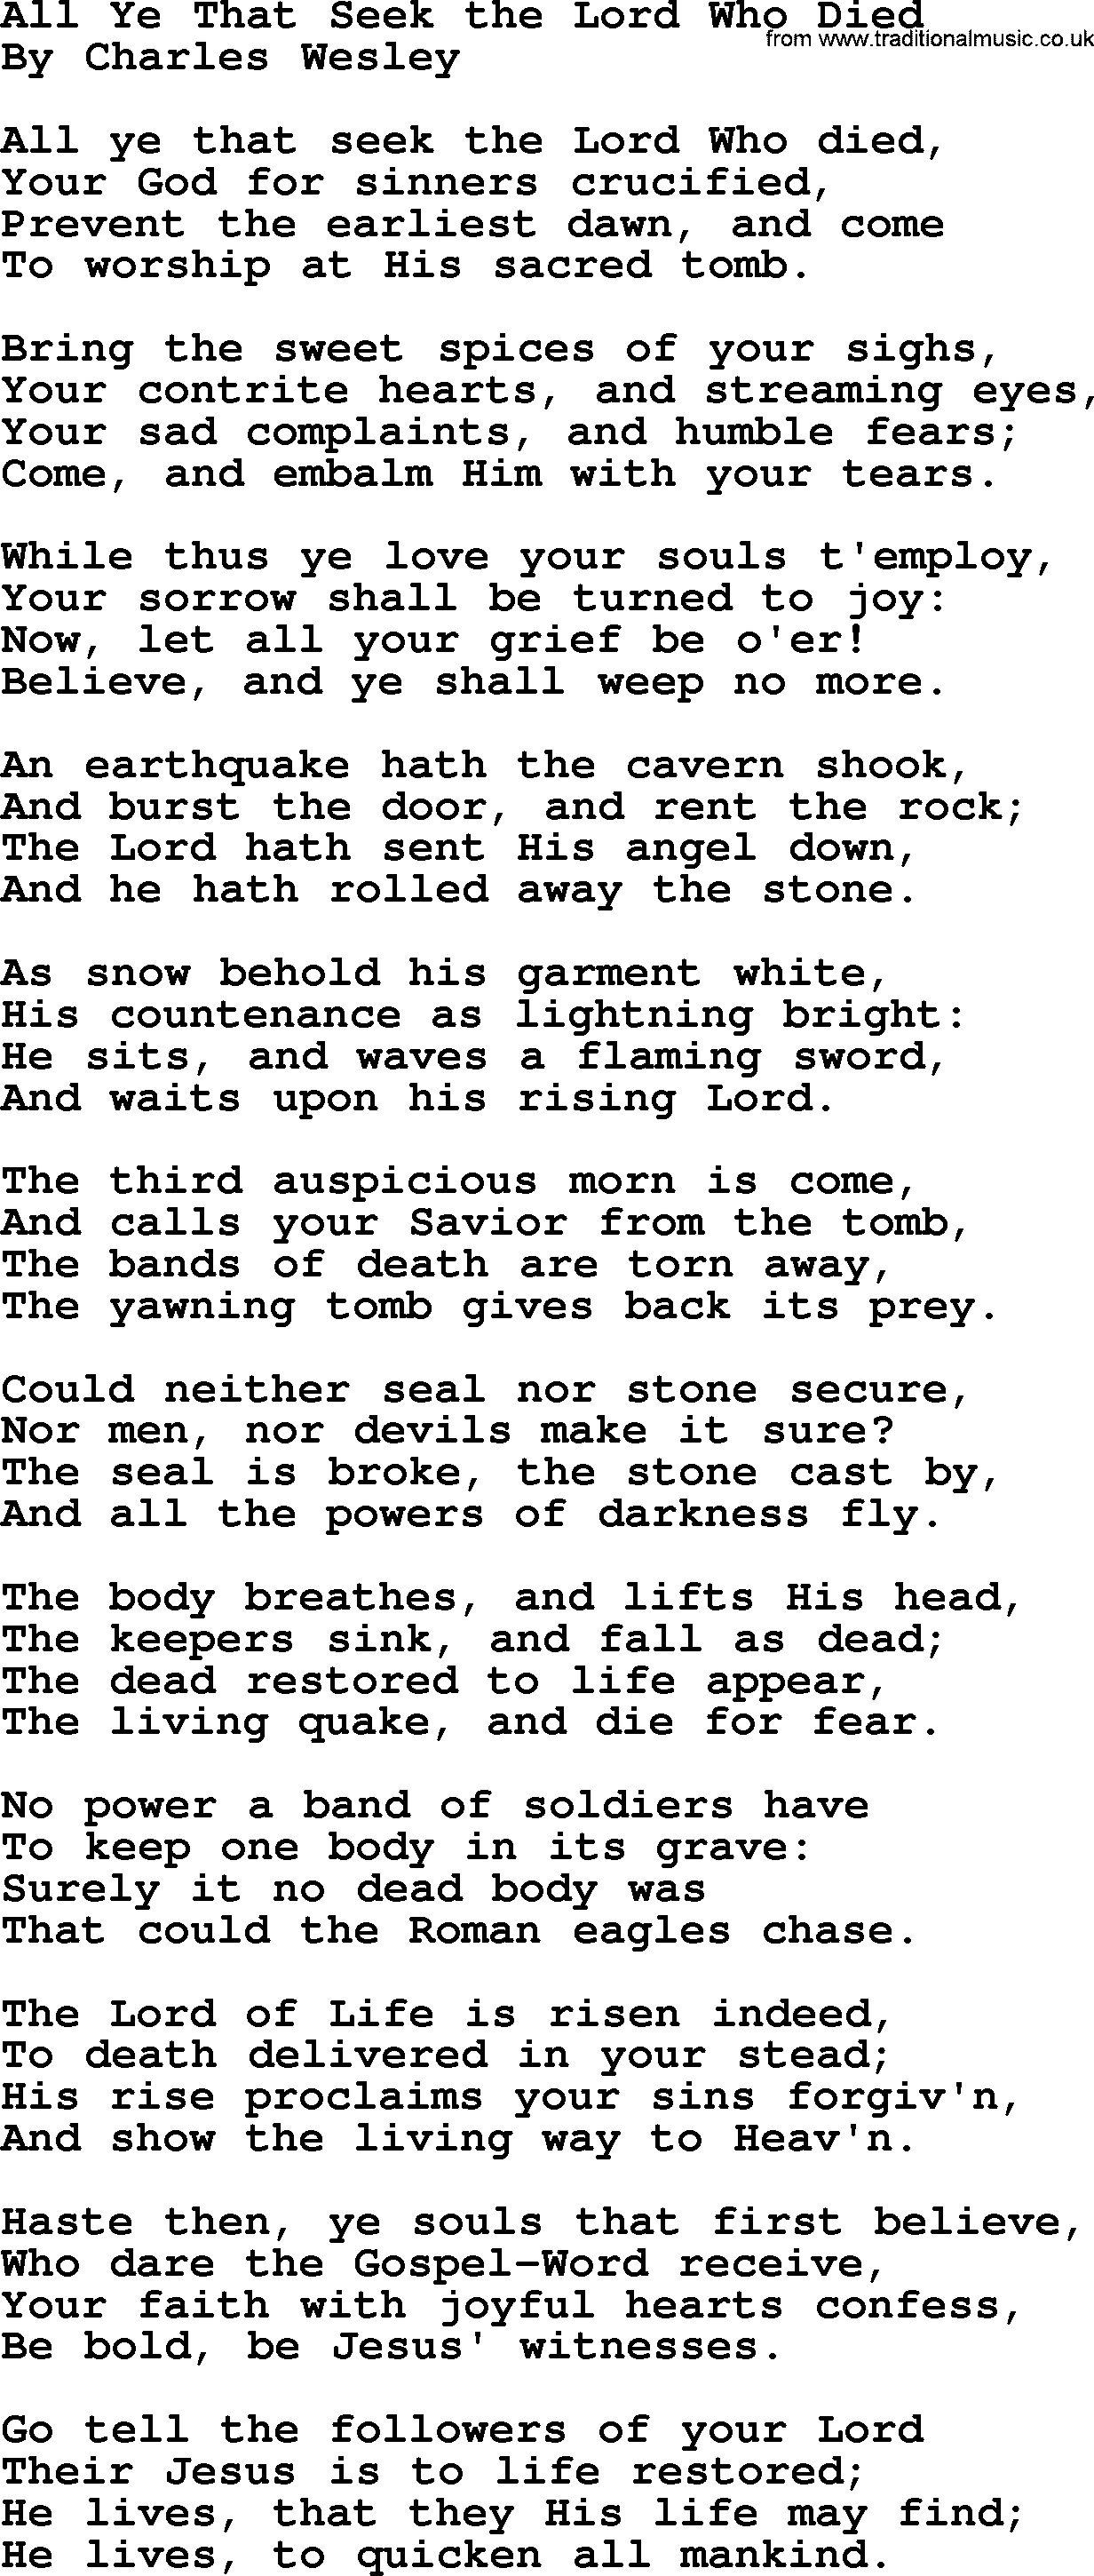 Charles Wesley hymn: All Ye That Seek the Lord Who Died, lyrics